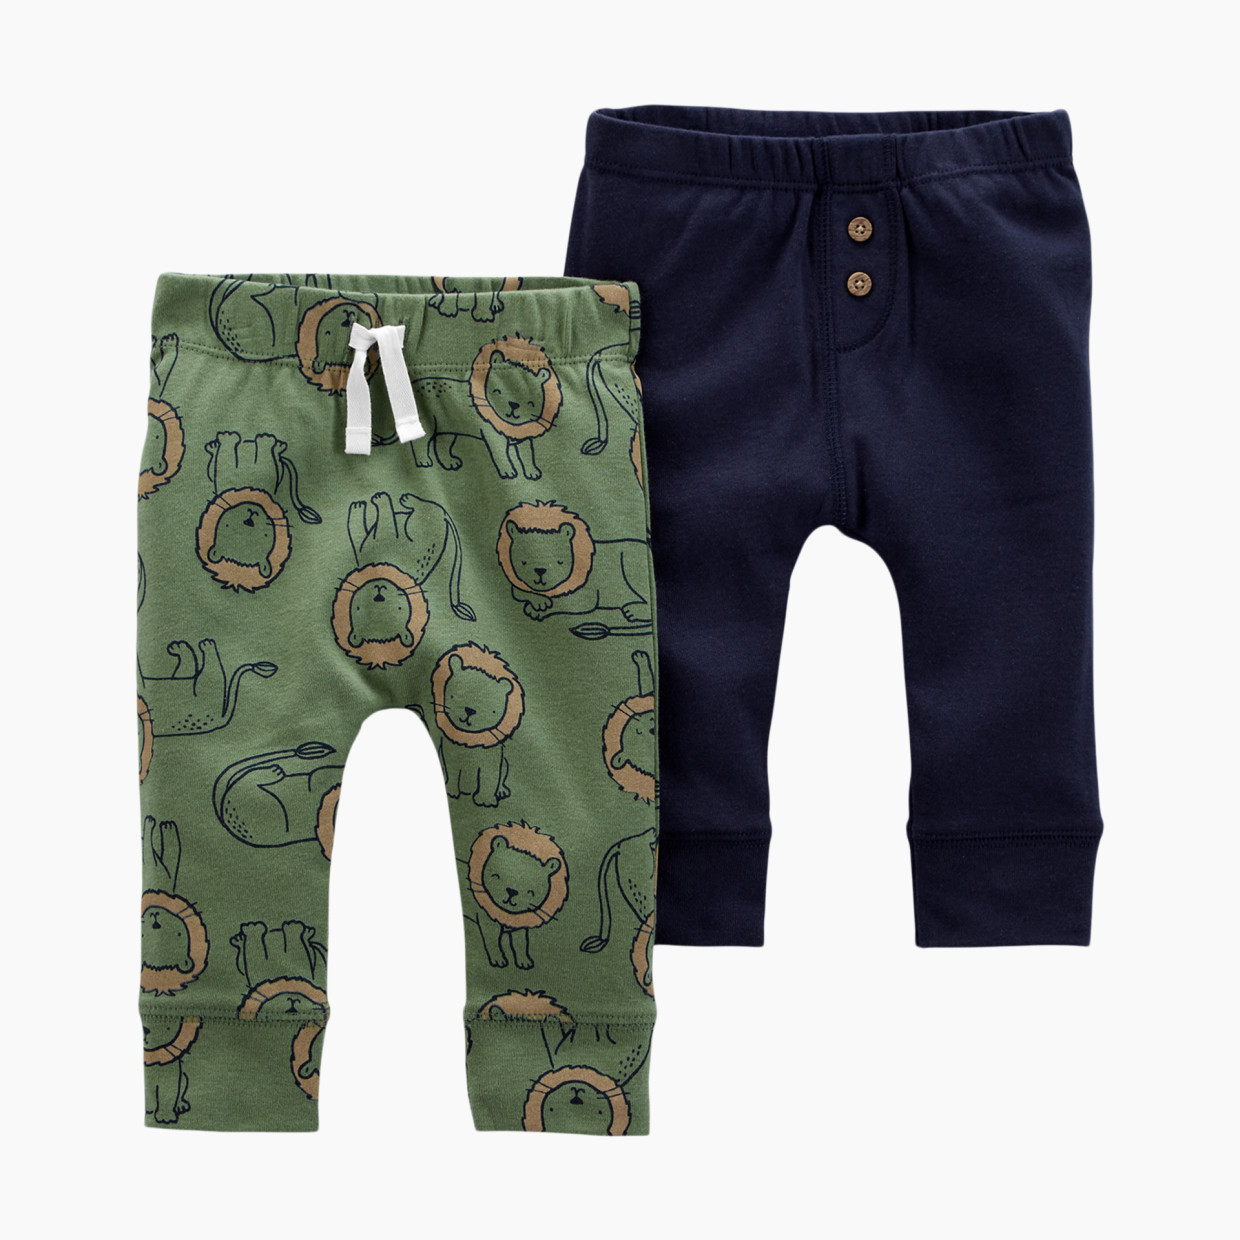 Carter's Cotton Pants (2 Pack) - Green/Blue, 3 M.